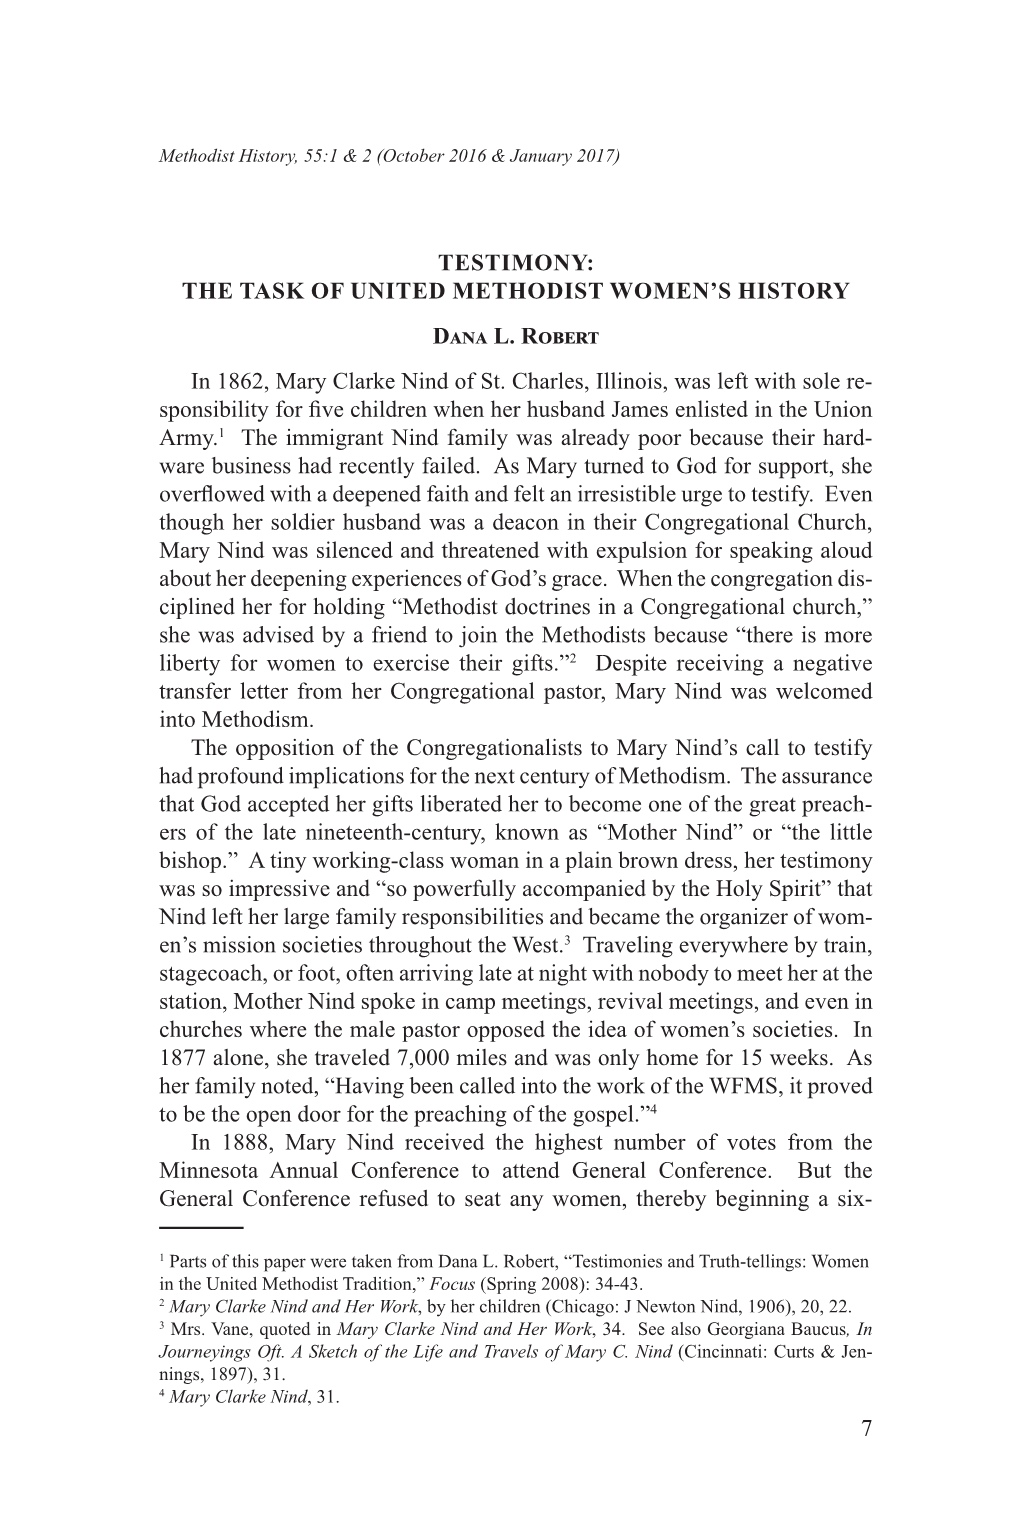 The Task of United Methodist Women's History Dana L. Robert